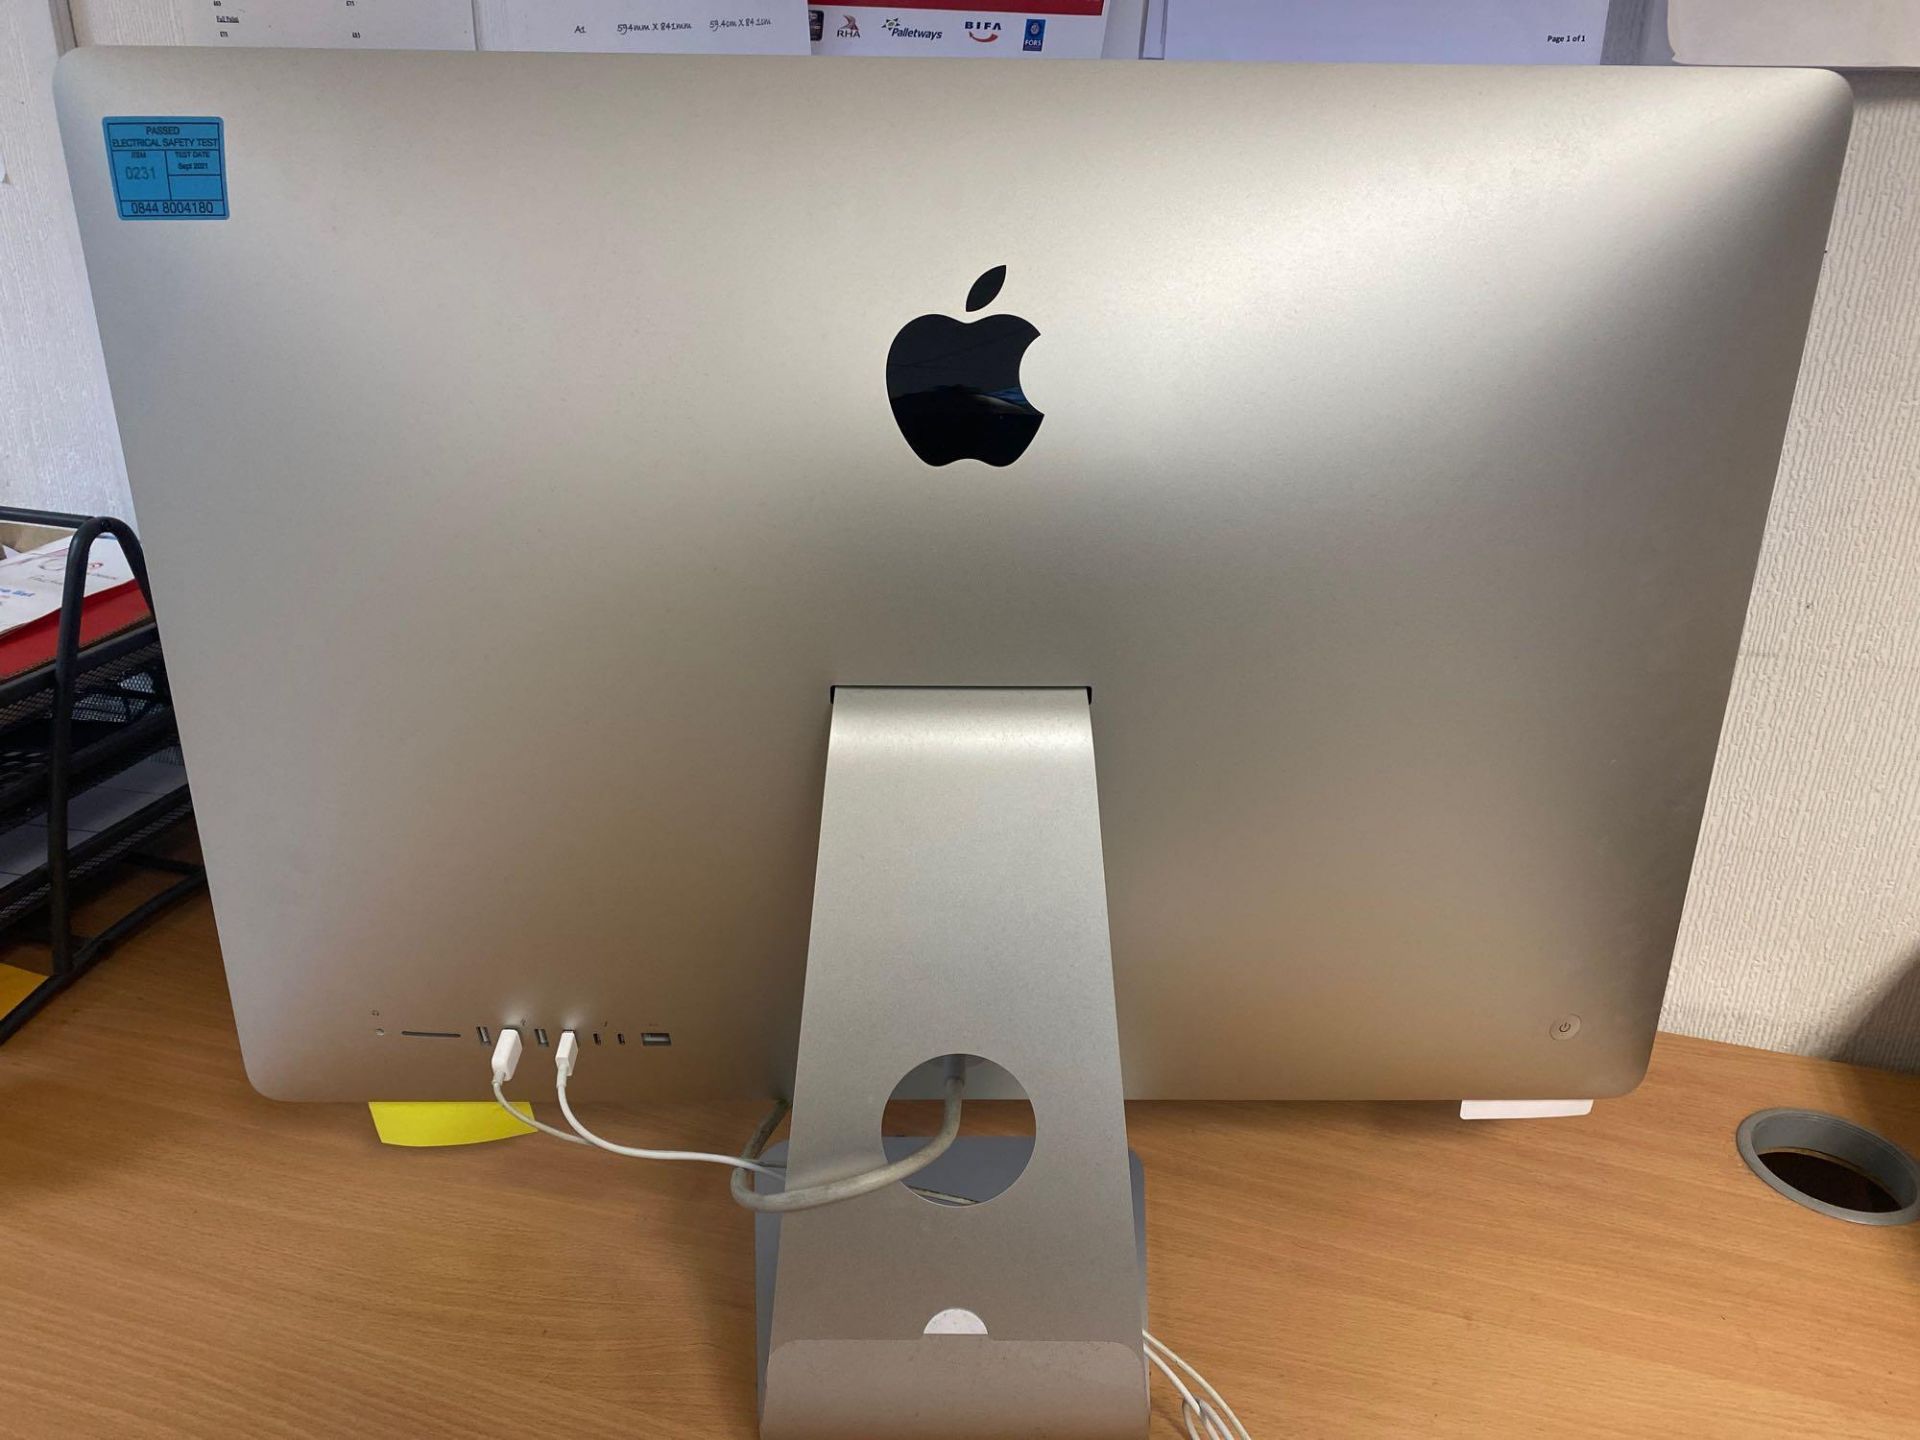 Apple iMac retina 5K 27 inch computer 2019 serial number C02D169QJV3N - Image 2 of 4